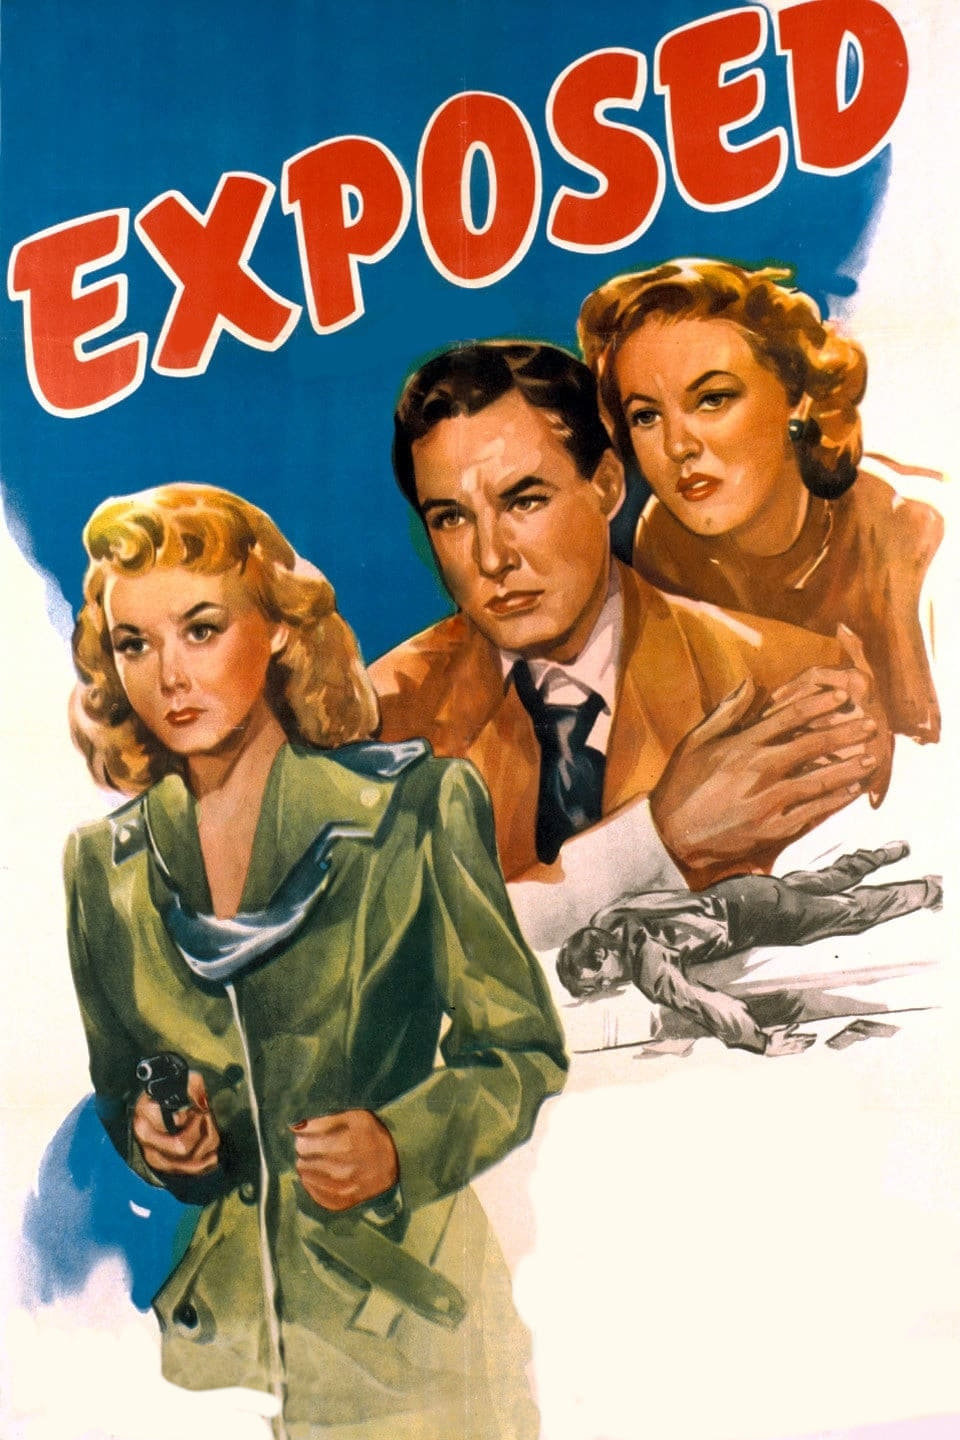 Exposed (1947)